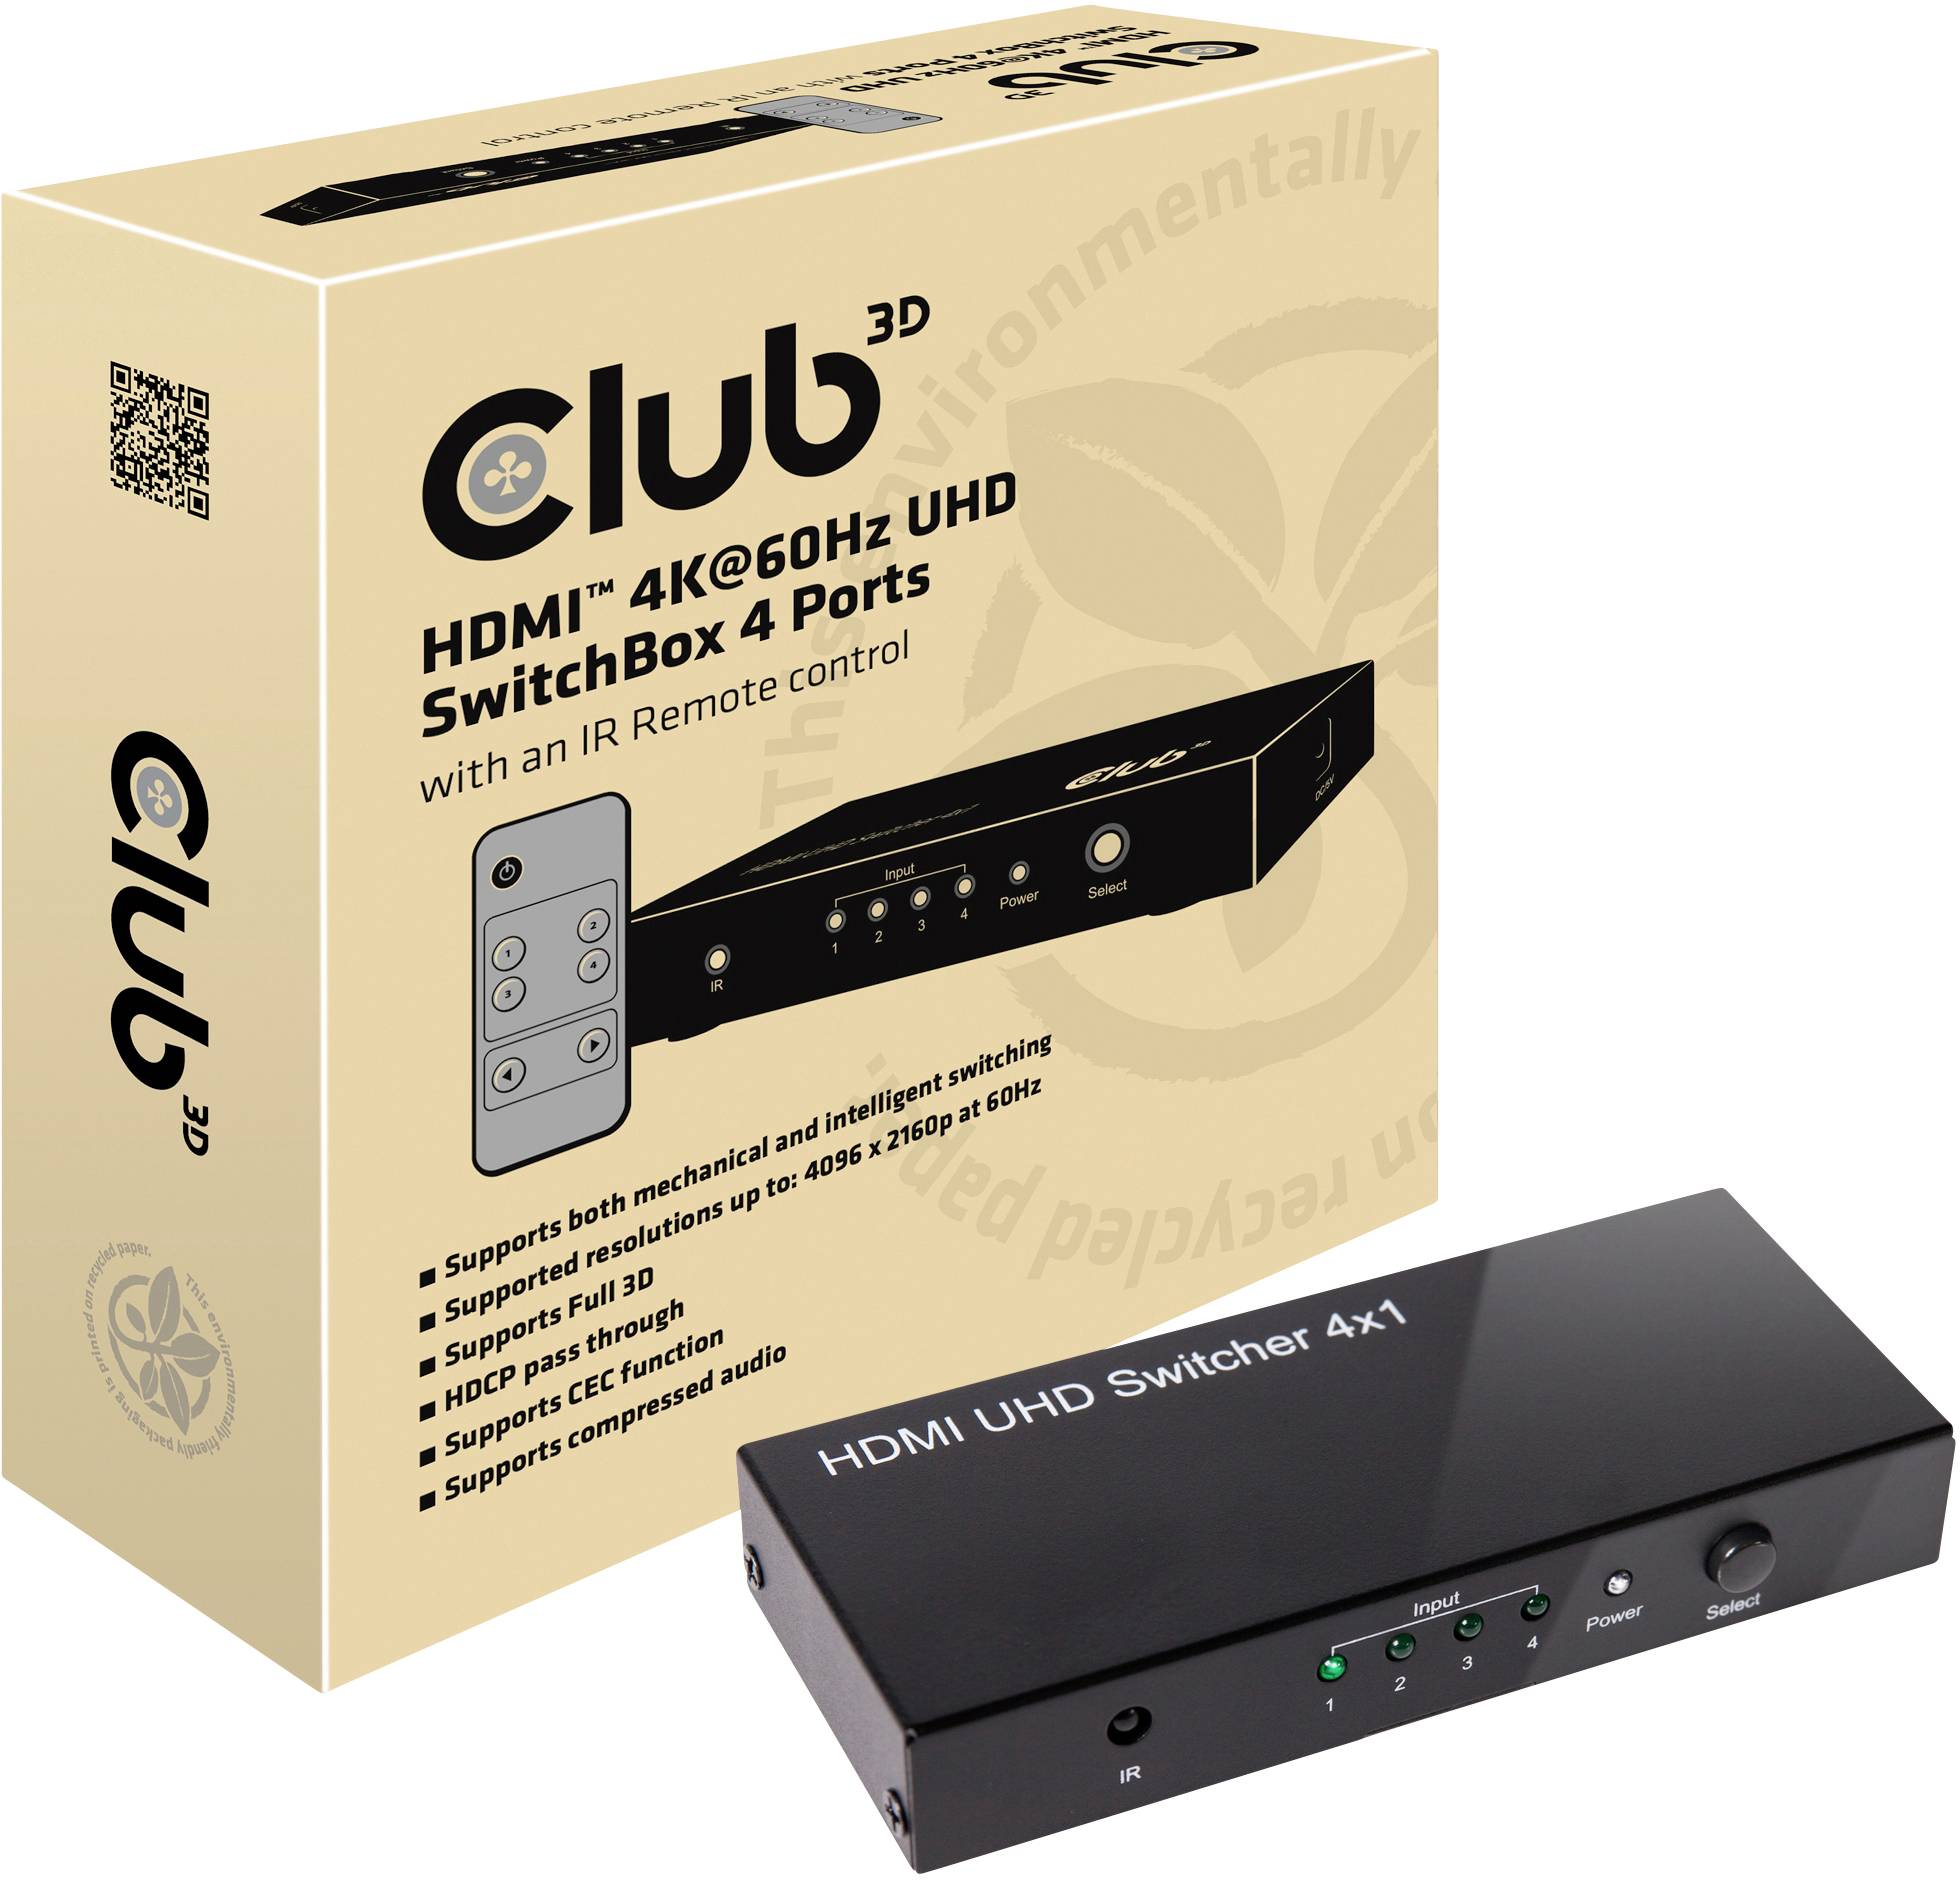 CLUB3D Club 3D SenseVision HDMI 2.0 4K 60Hz UHD Switchbox 4-Port CSV-1370